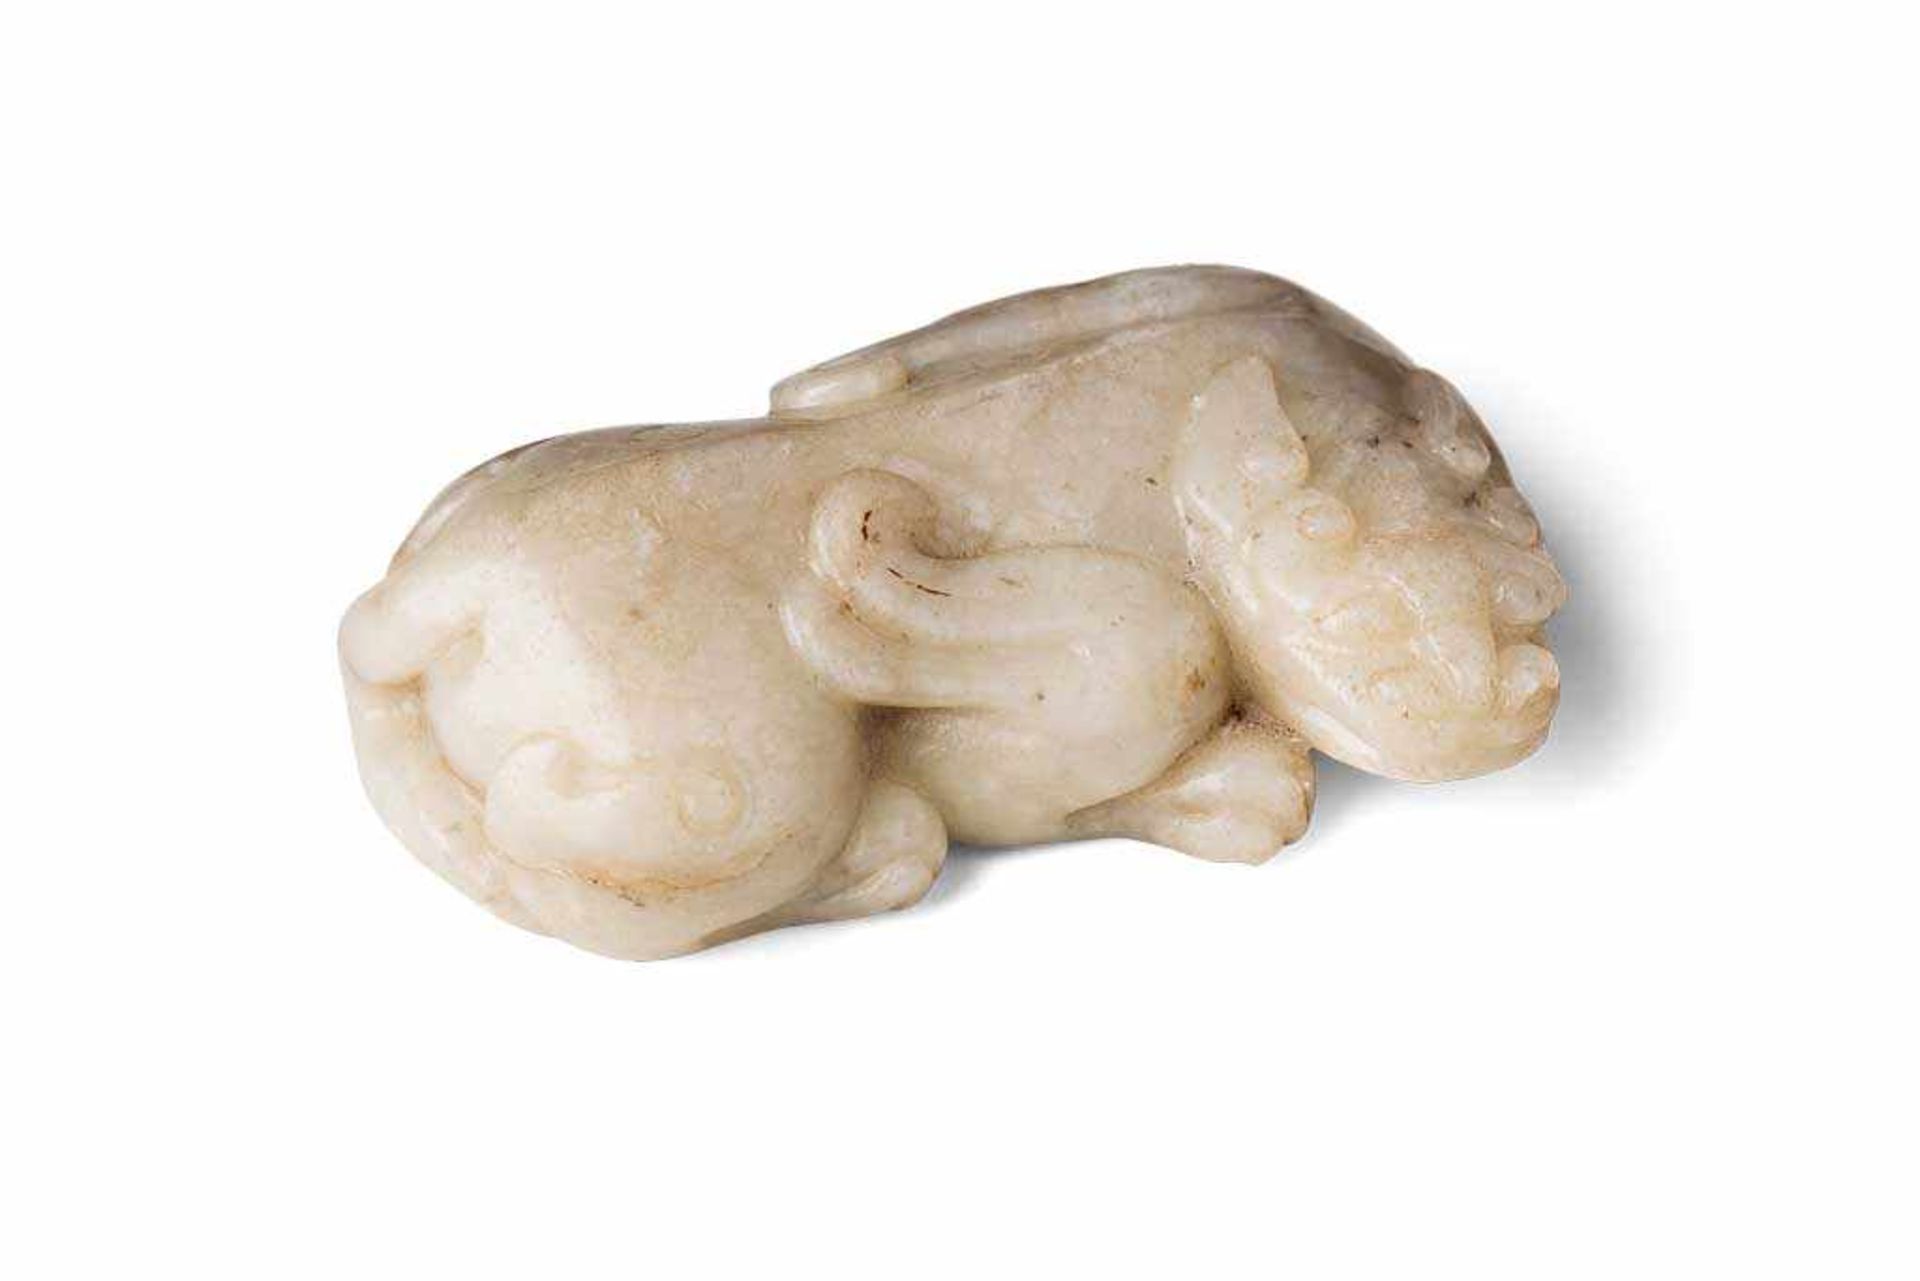 Liegender Löwe. Helle beige Jadeschnitzerei. China, 17./18. Jh. L 7 cm